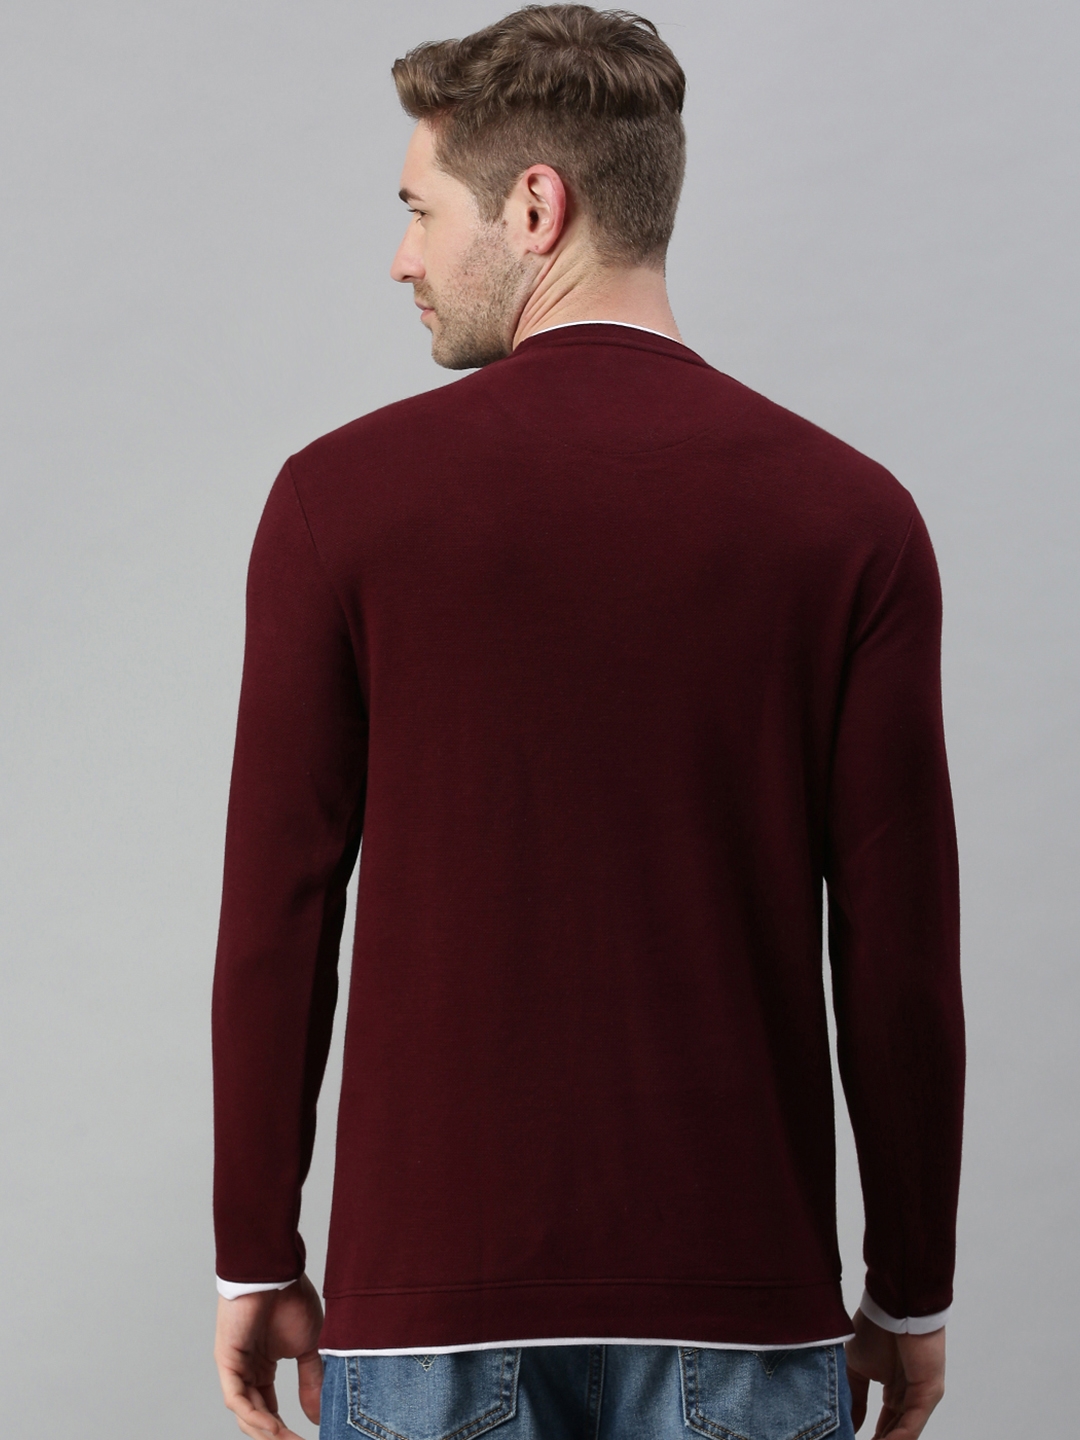 Men's Red Cotton Blend Solid Sweatshirts